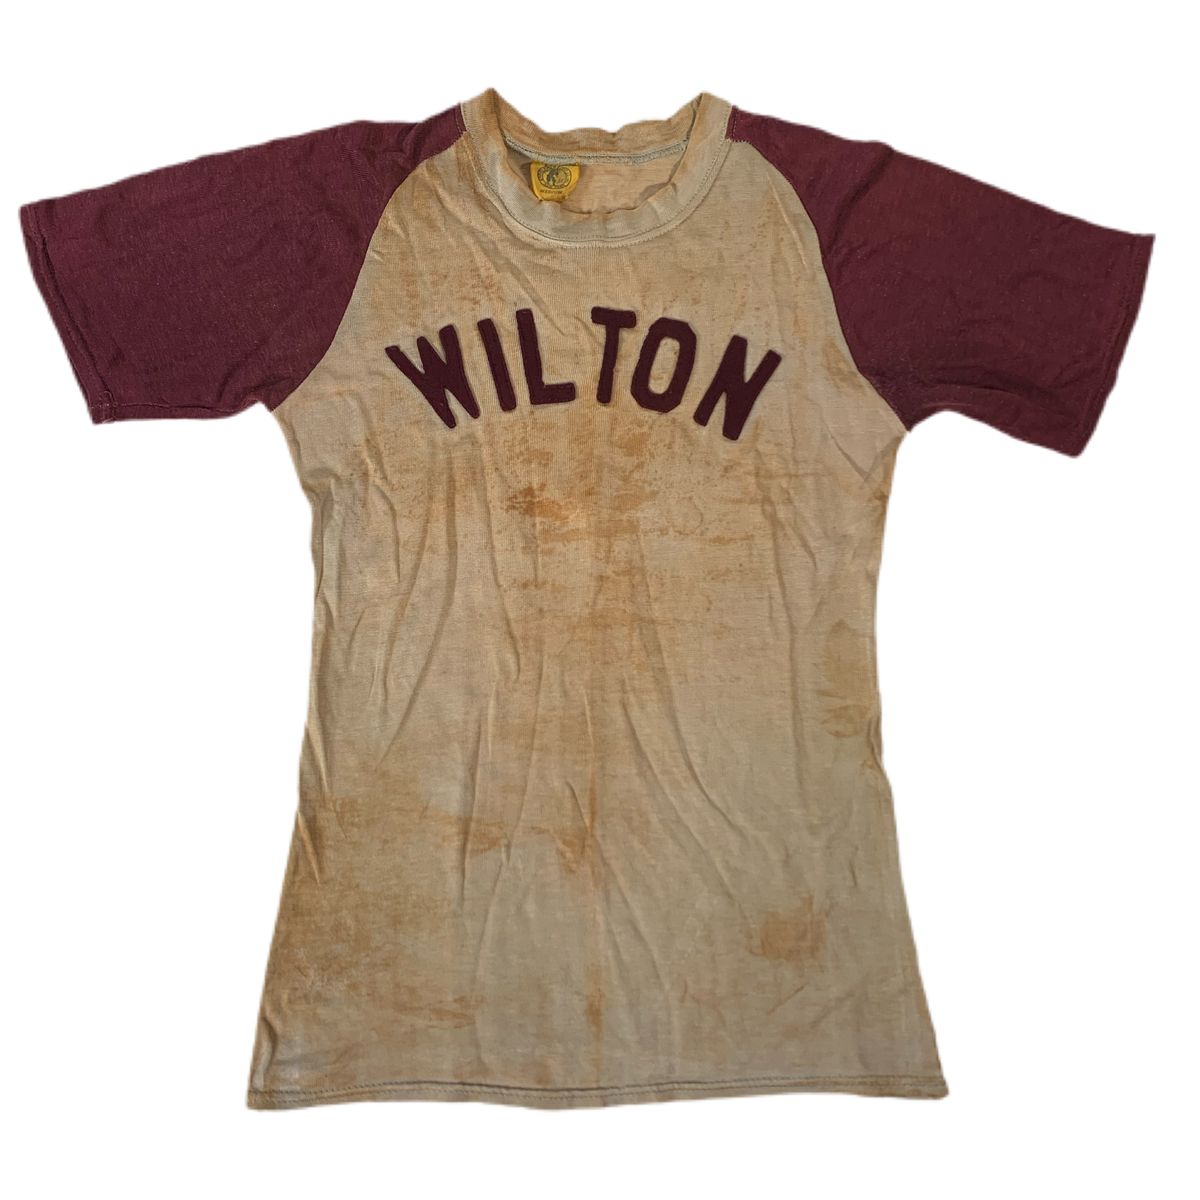 Vintage Empire Athletic Supply Co. “Wilton” Jersey - jointcustodydc